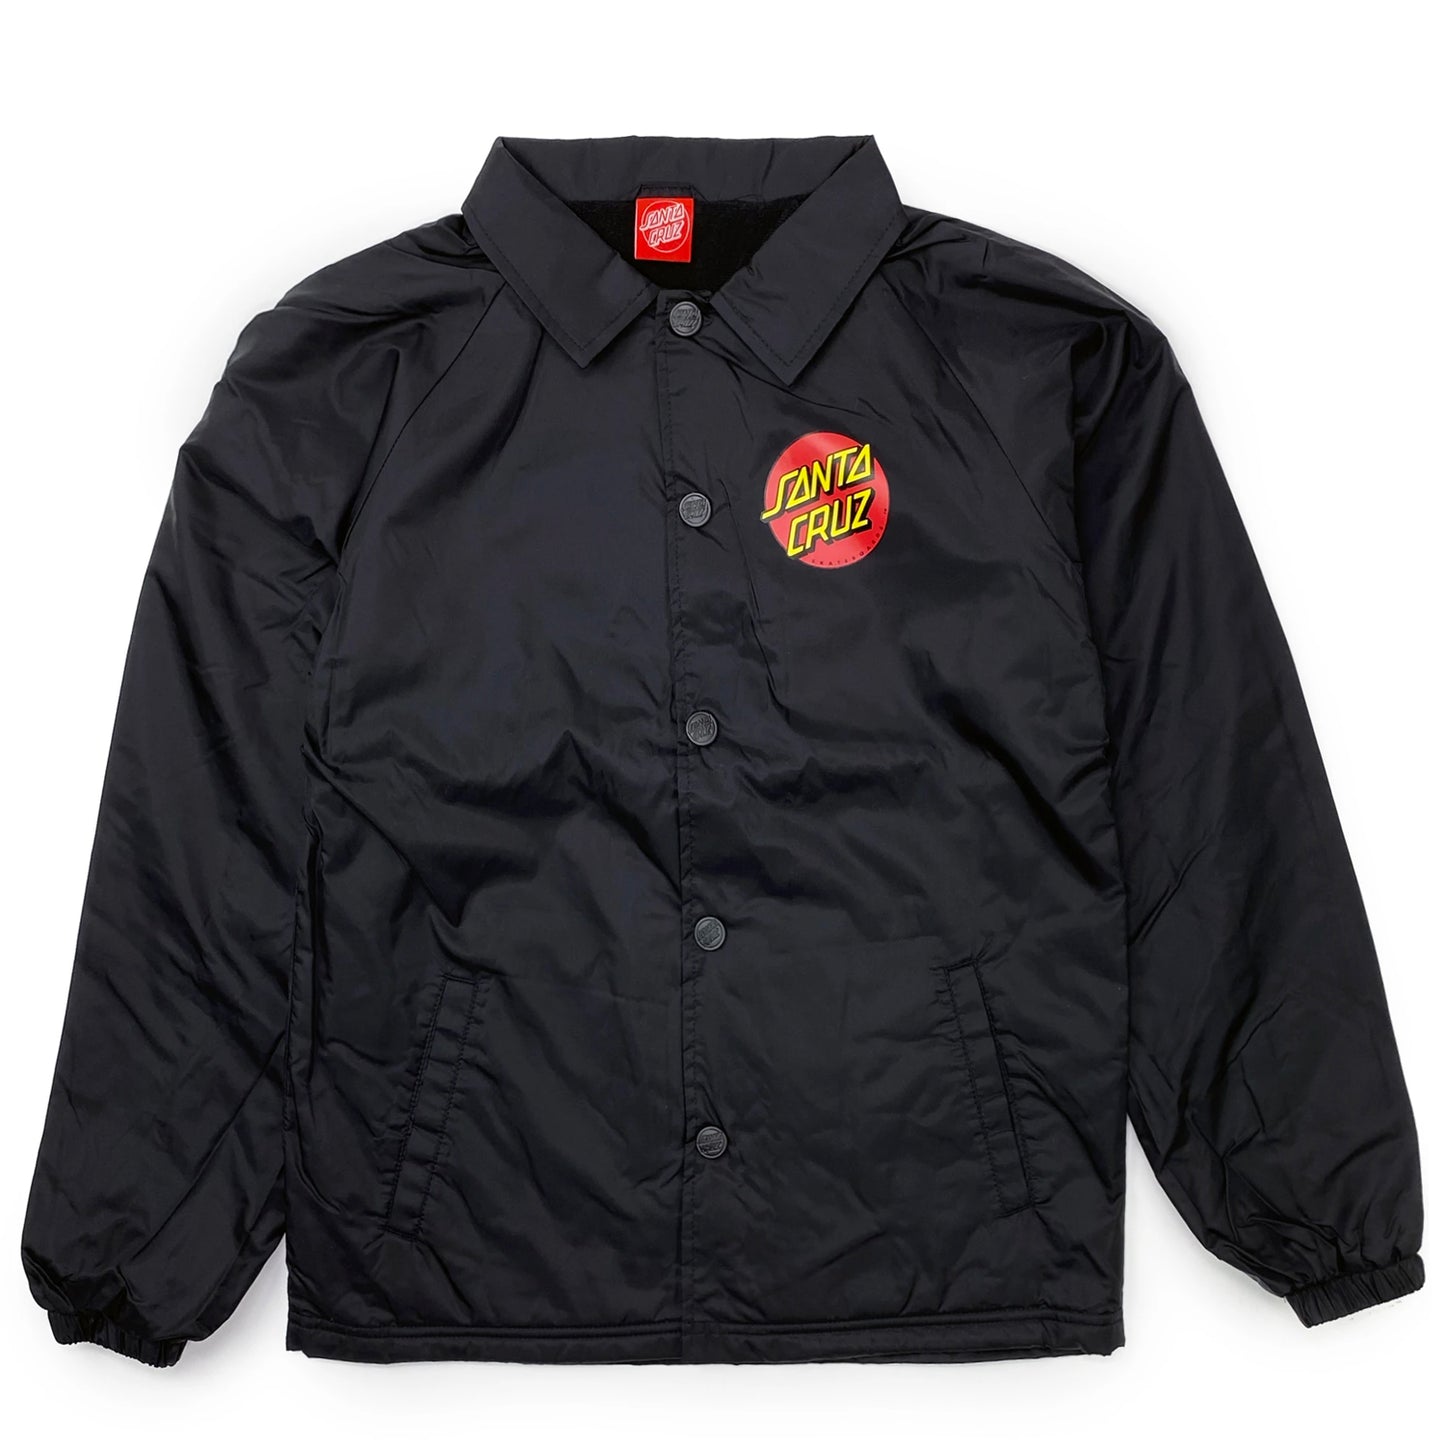 Santa Cruz Classic Dot Coach Jacket - Black - Prime Delux Store